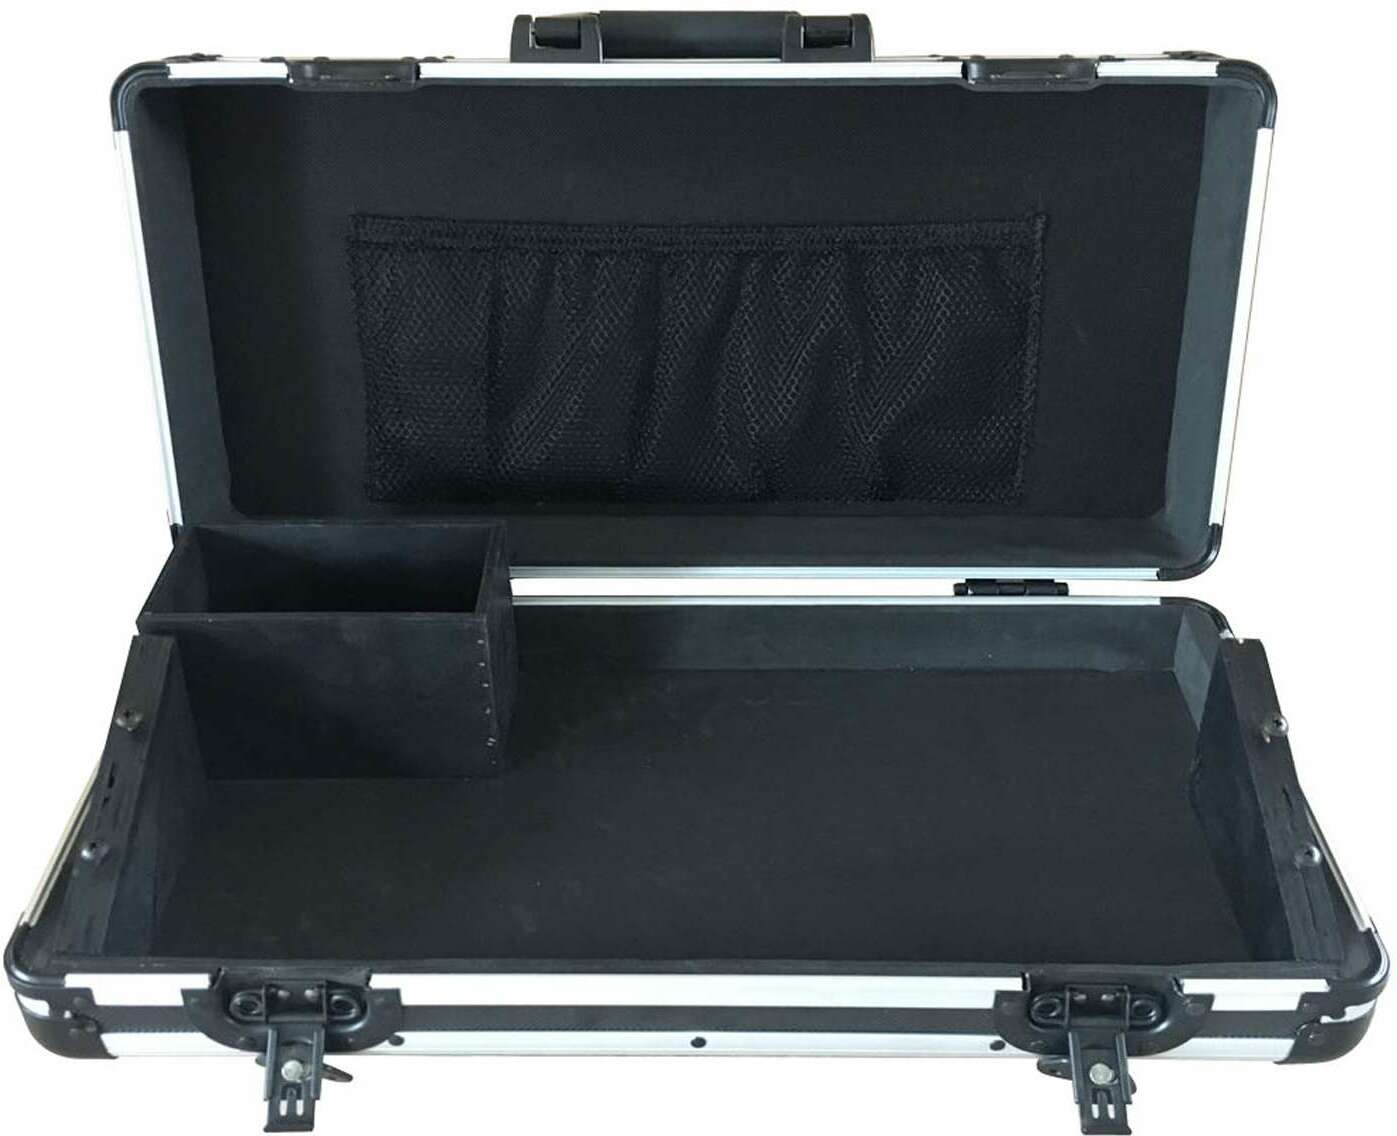 Power Acoustics Fl Dmx Controller - Bag & flightcase for lighting equipment - Main picture